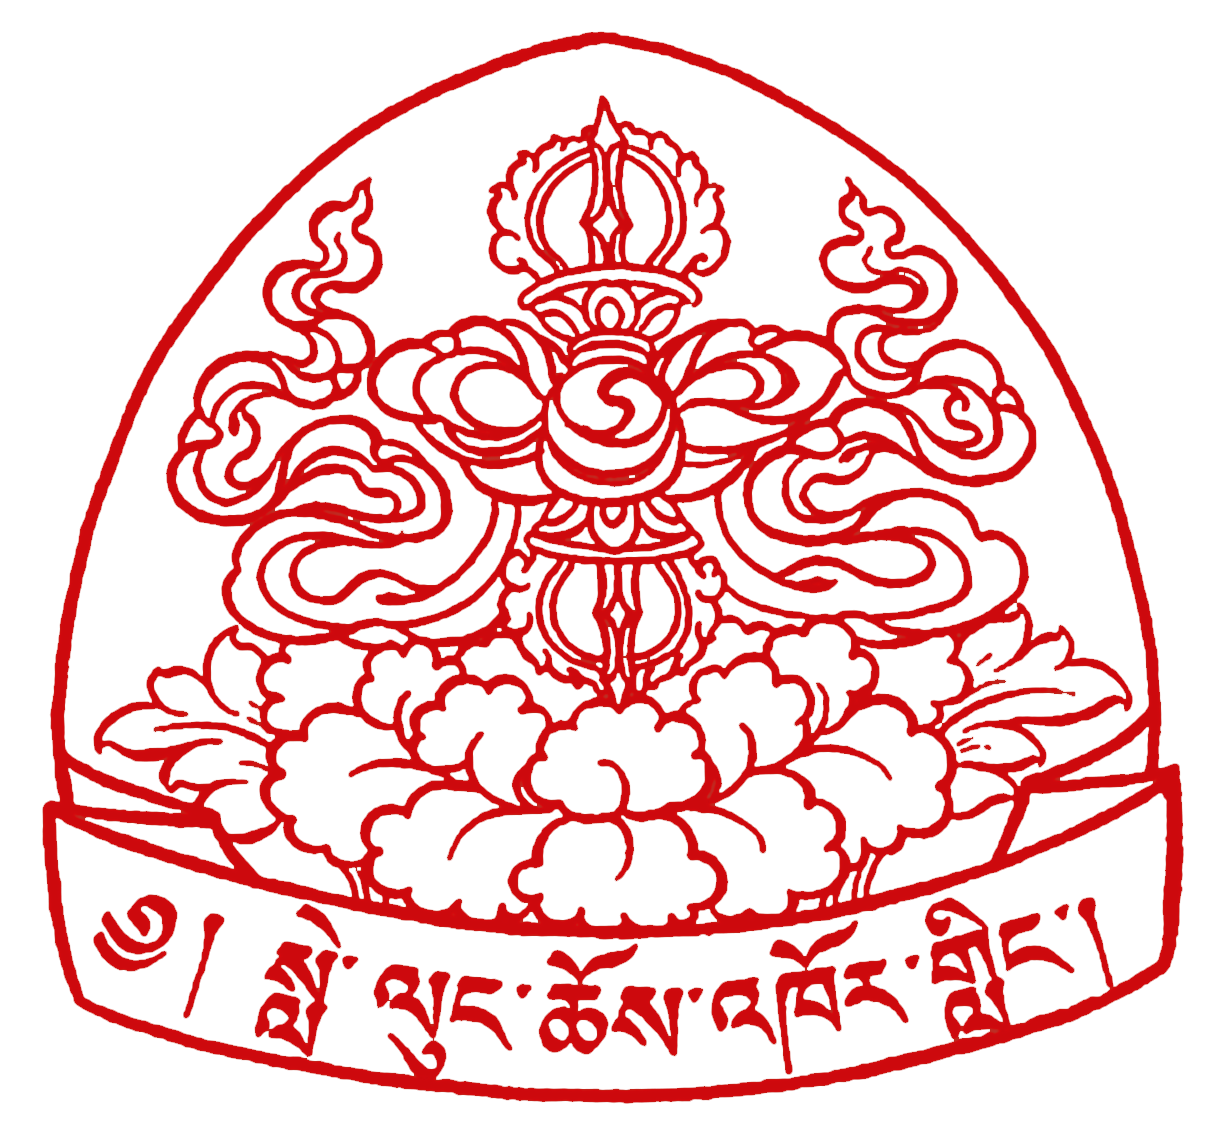 Lelung Dharma Trust